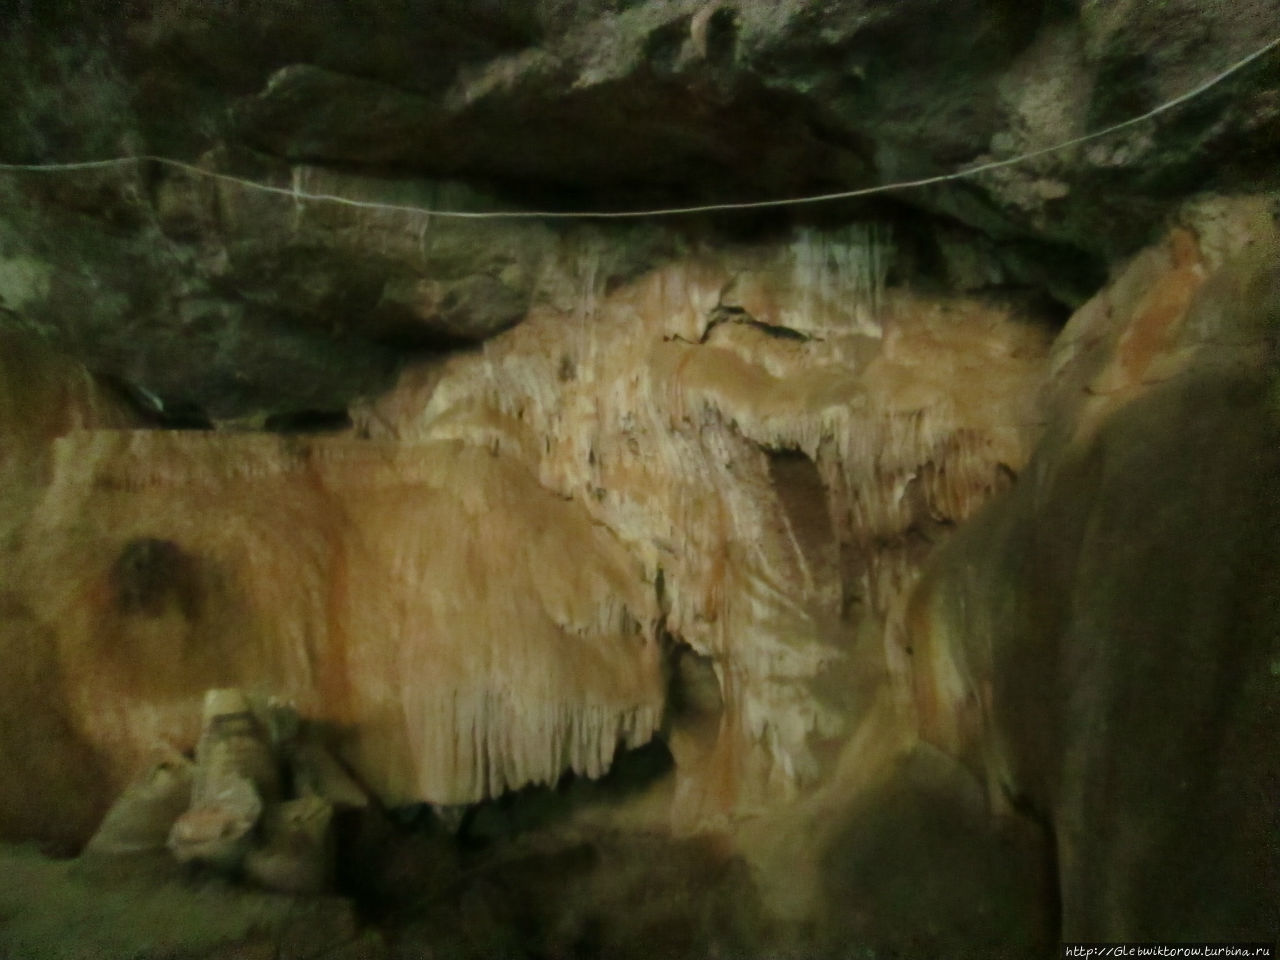 Посещение пещеры  Ya The Byan Хпа-Ан, Мьянма